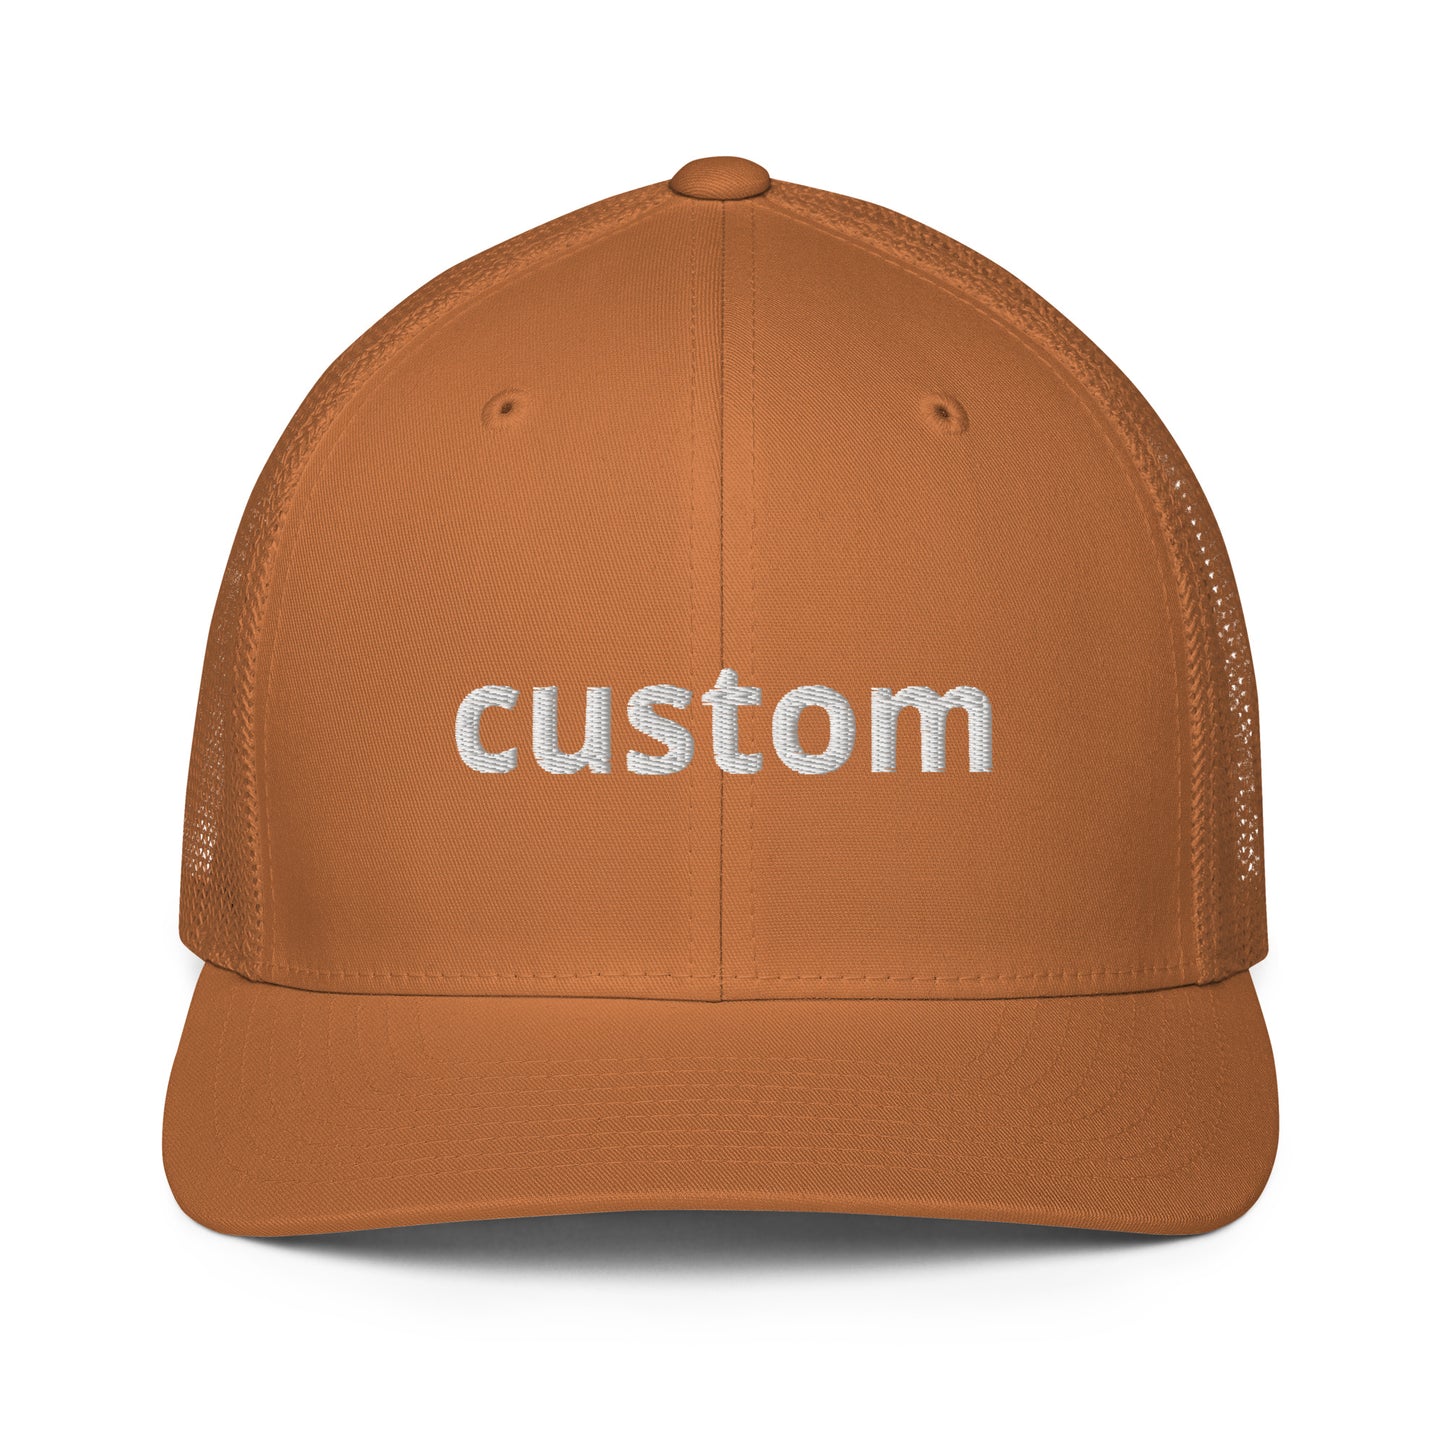 Customize your Trucker Cap